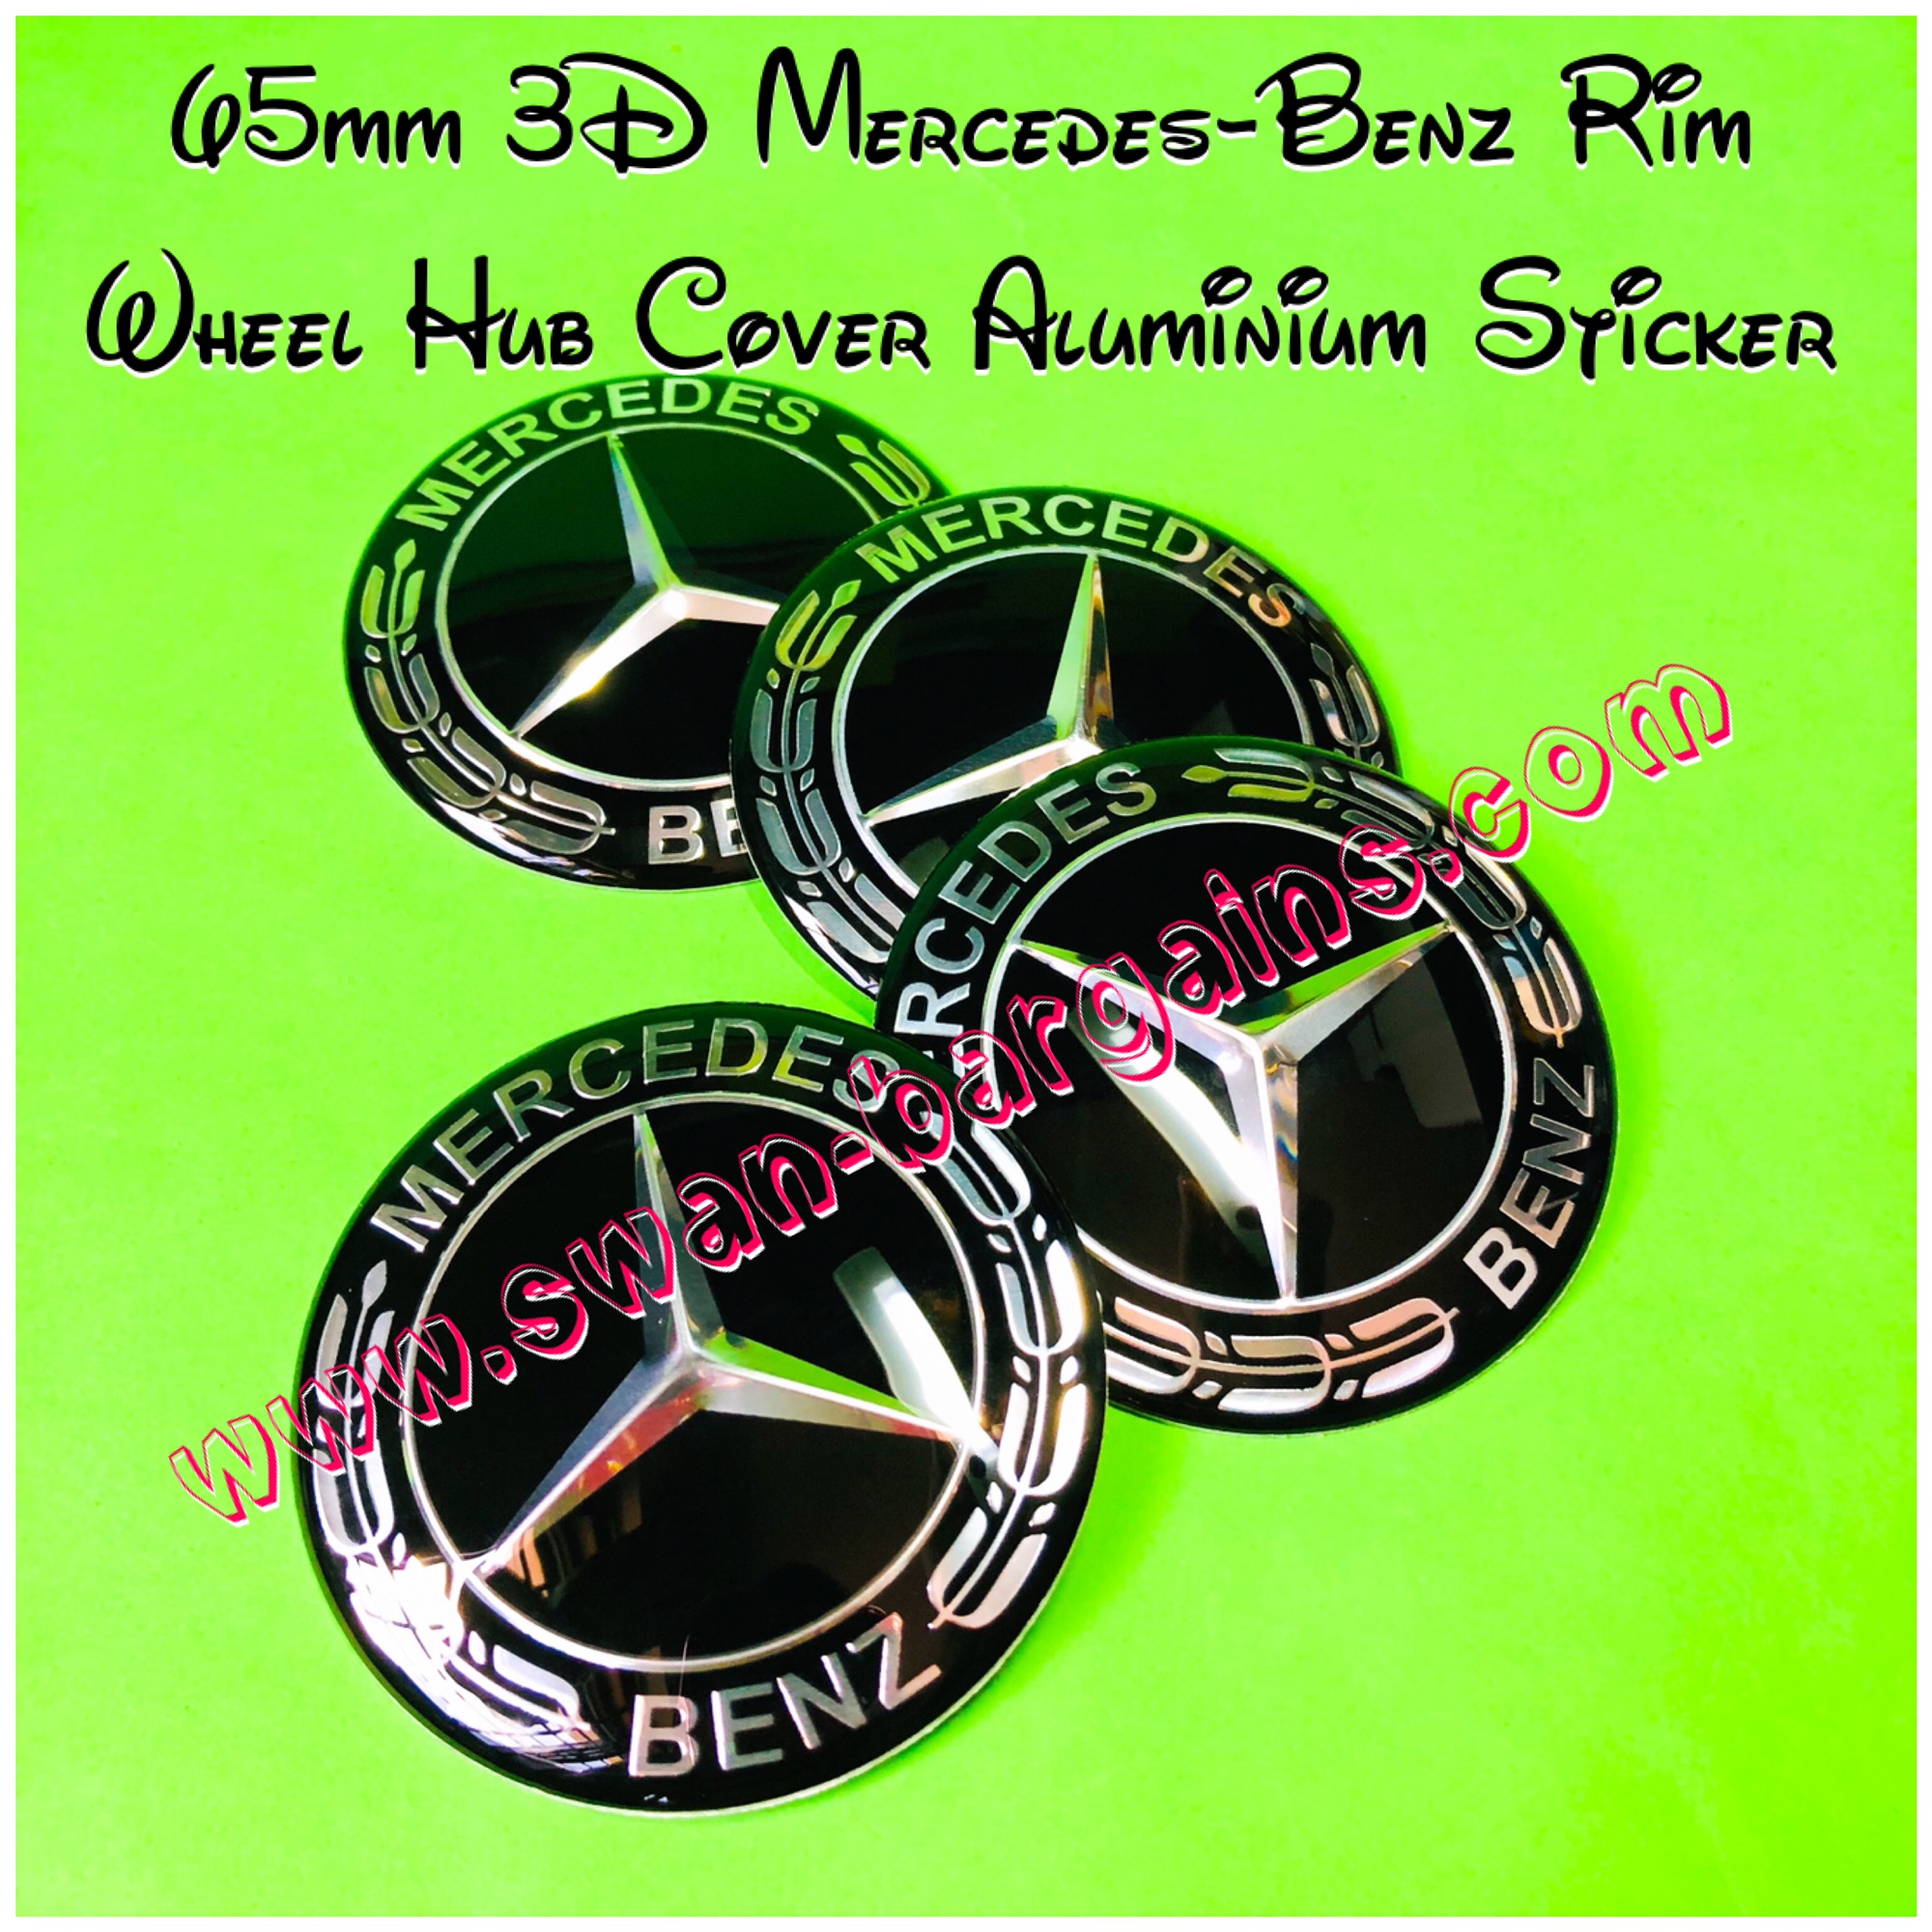 65mm Benz Sports Rim Wheel Hub Cap Sticker Singapore - 3D Glossy Black Laurel Wreath